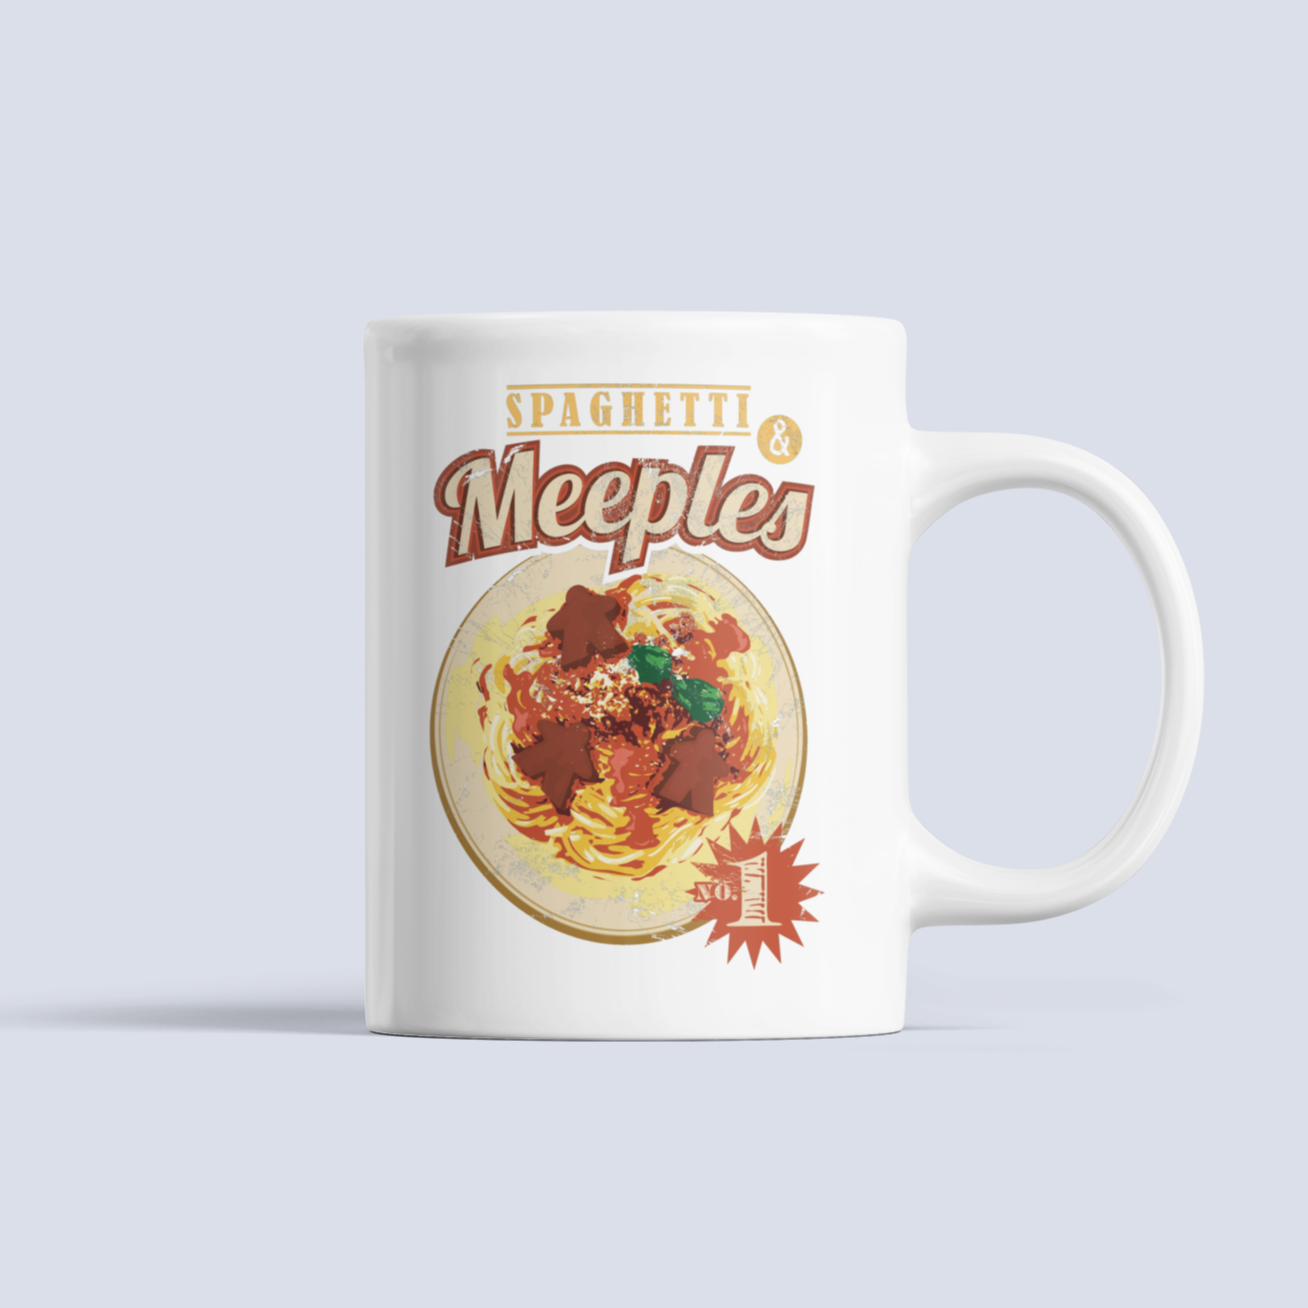 Spaghetti & Meeples Board Game Ceramic Mug